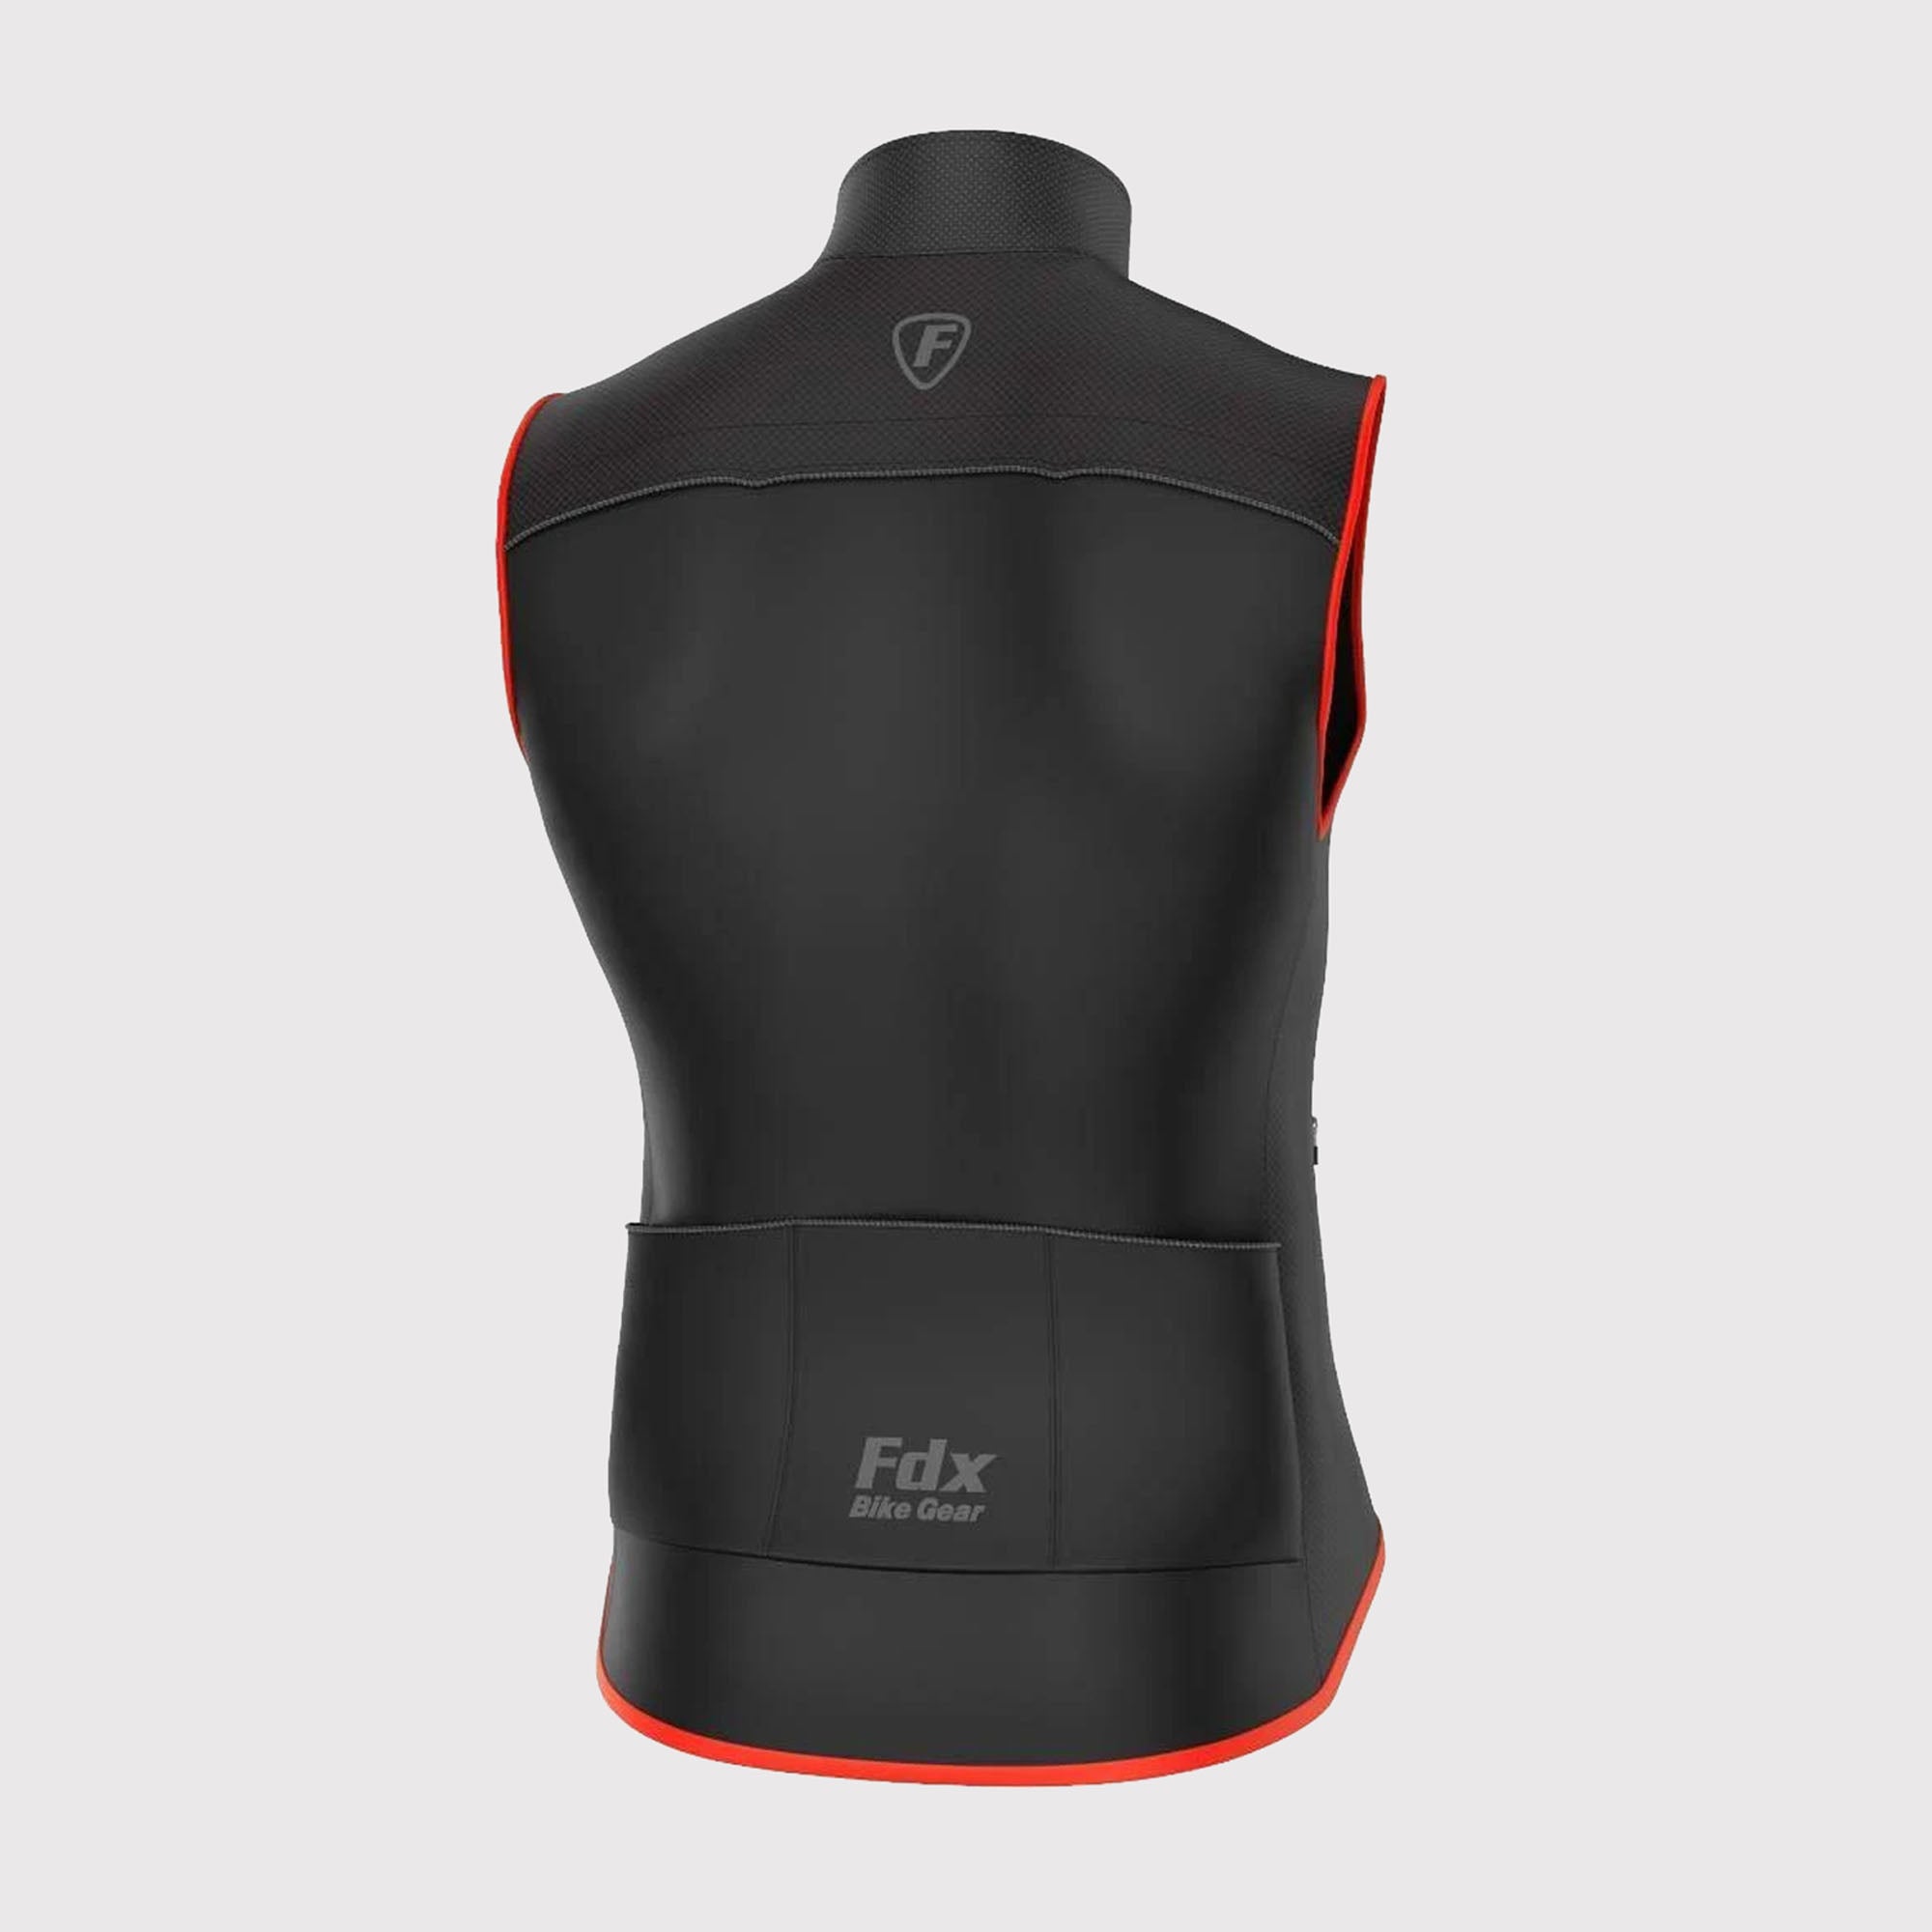 Fdx Men's Black & Red Cycling Gilet Sleeveless Vest for Winter Clothing Hi-Viz Refectors, Lightweight, Windproof, Waterproof & Pockets - Stunt